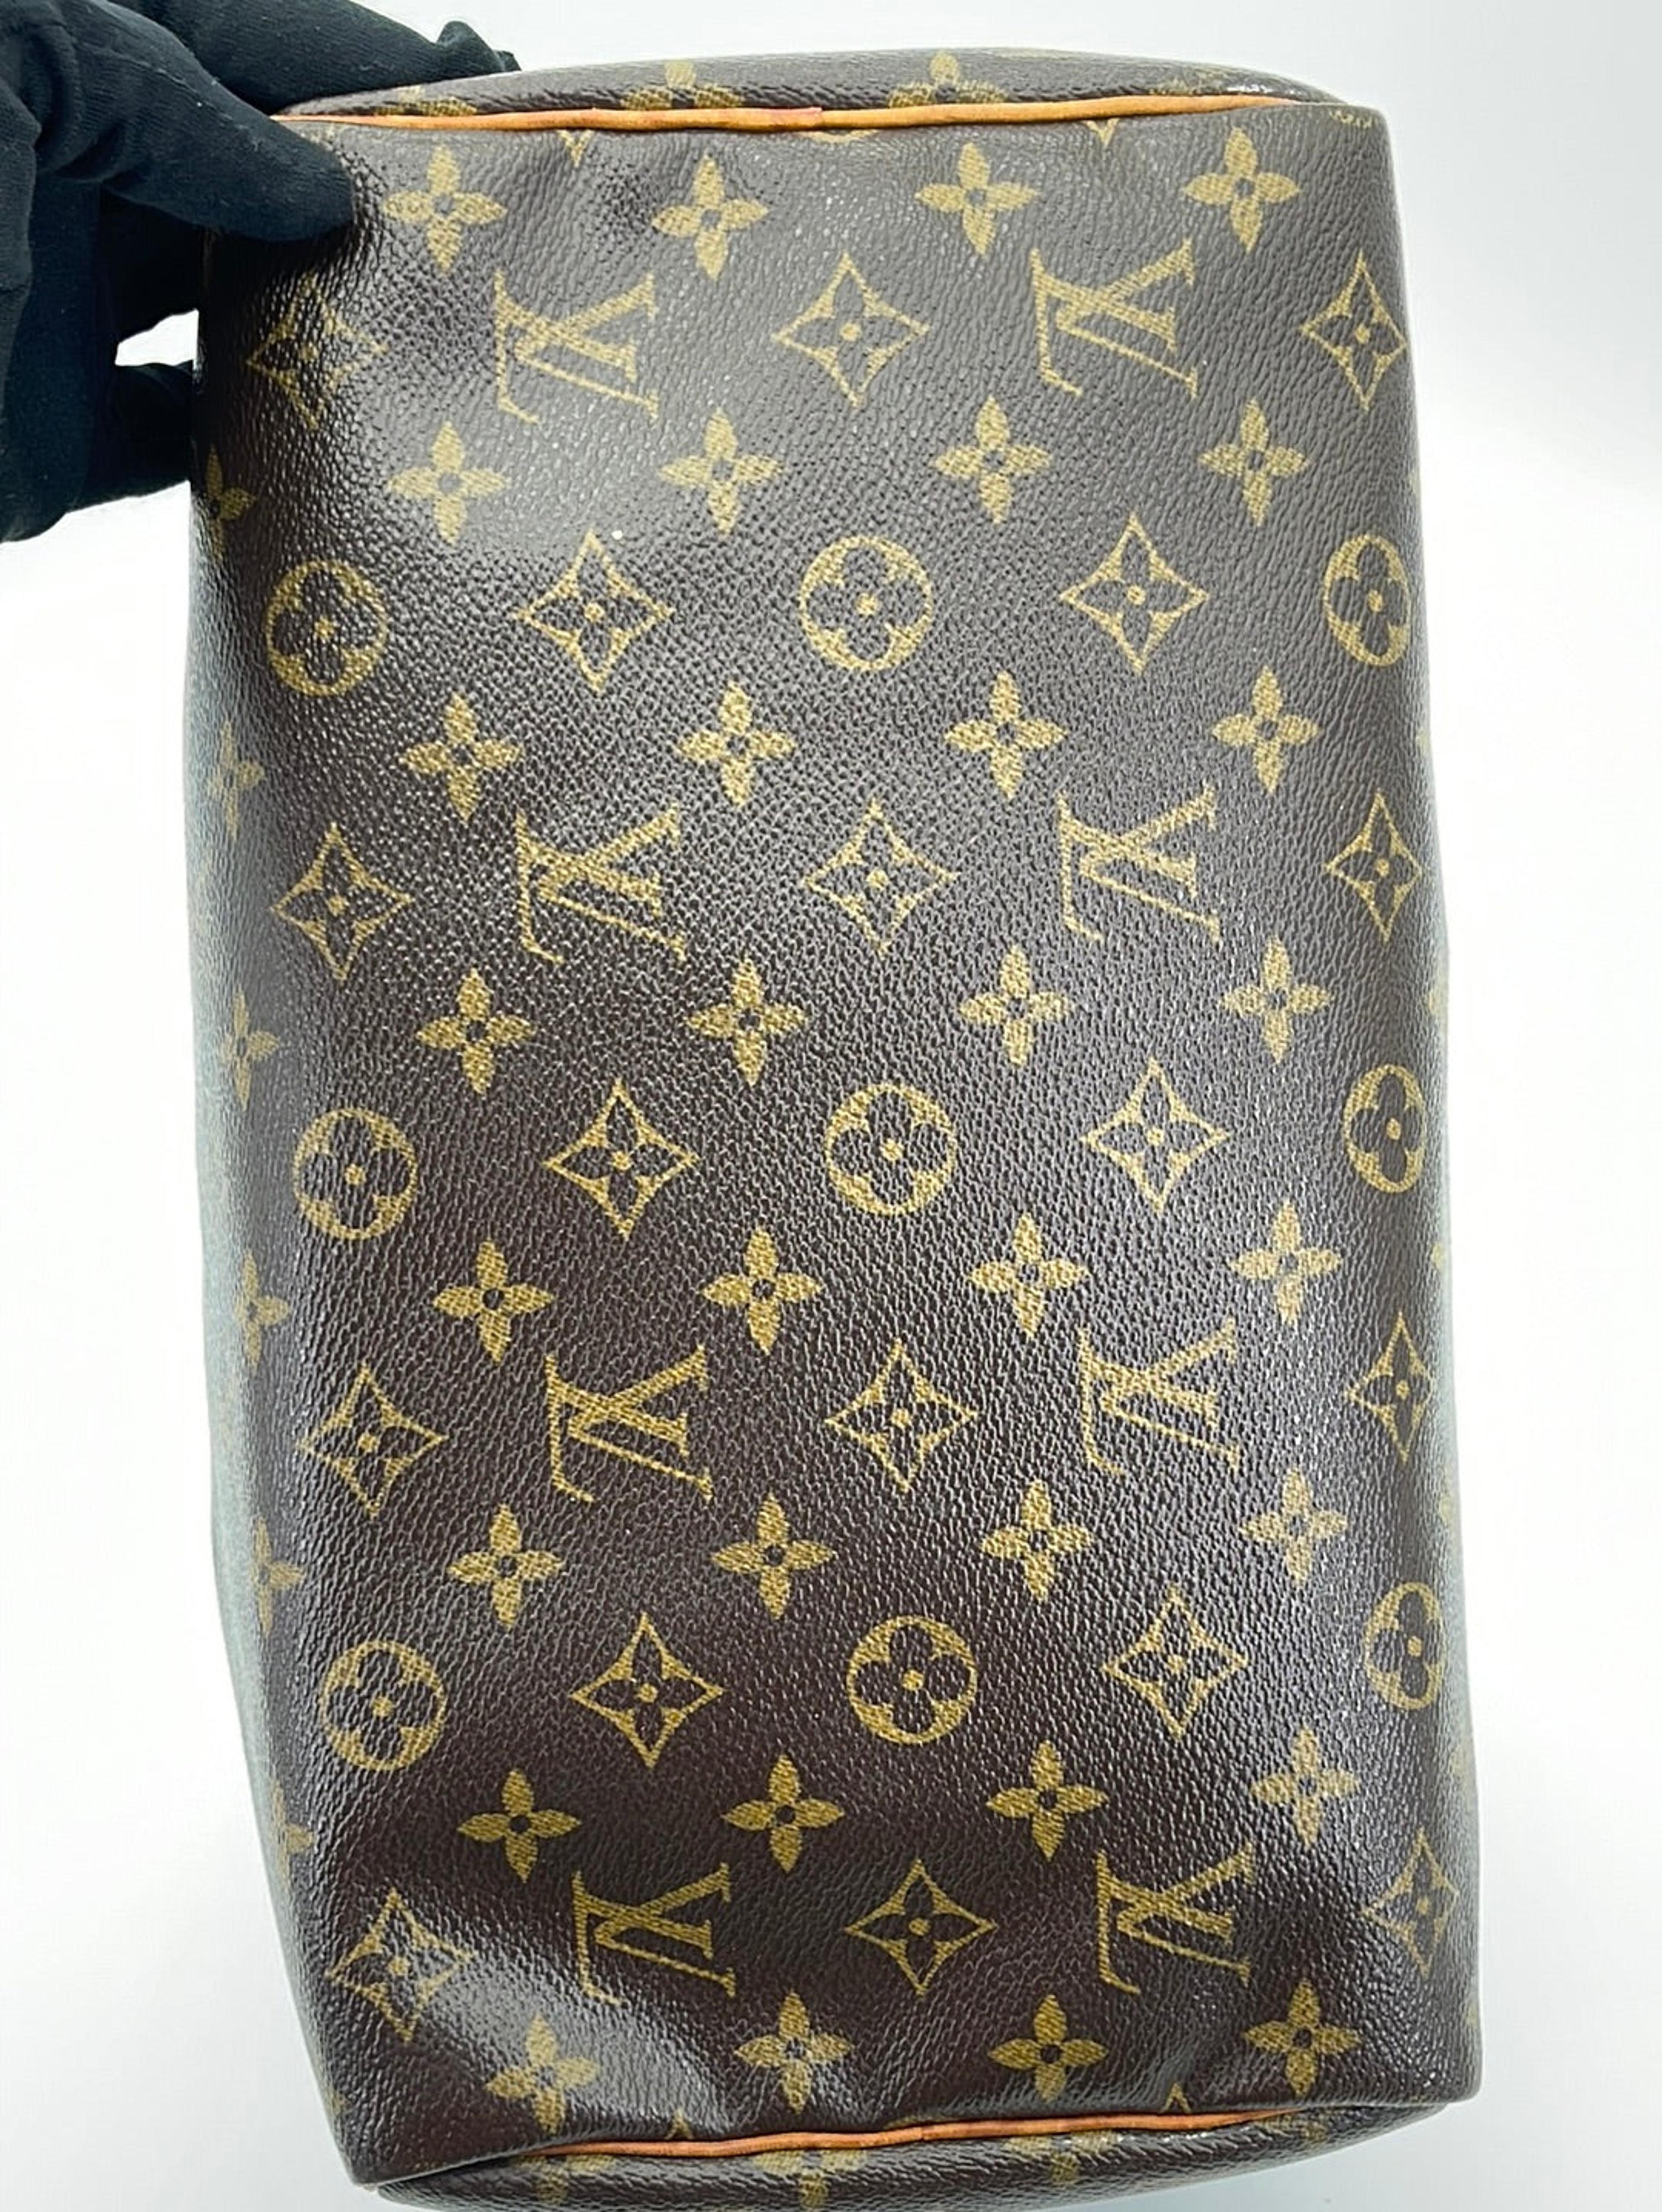 NTWRK - PRELOVED Louis Vuitton Monogram Speedy 30 Bag TH0033 061323 $200